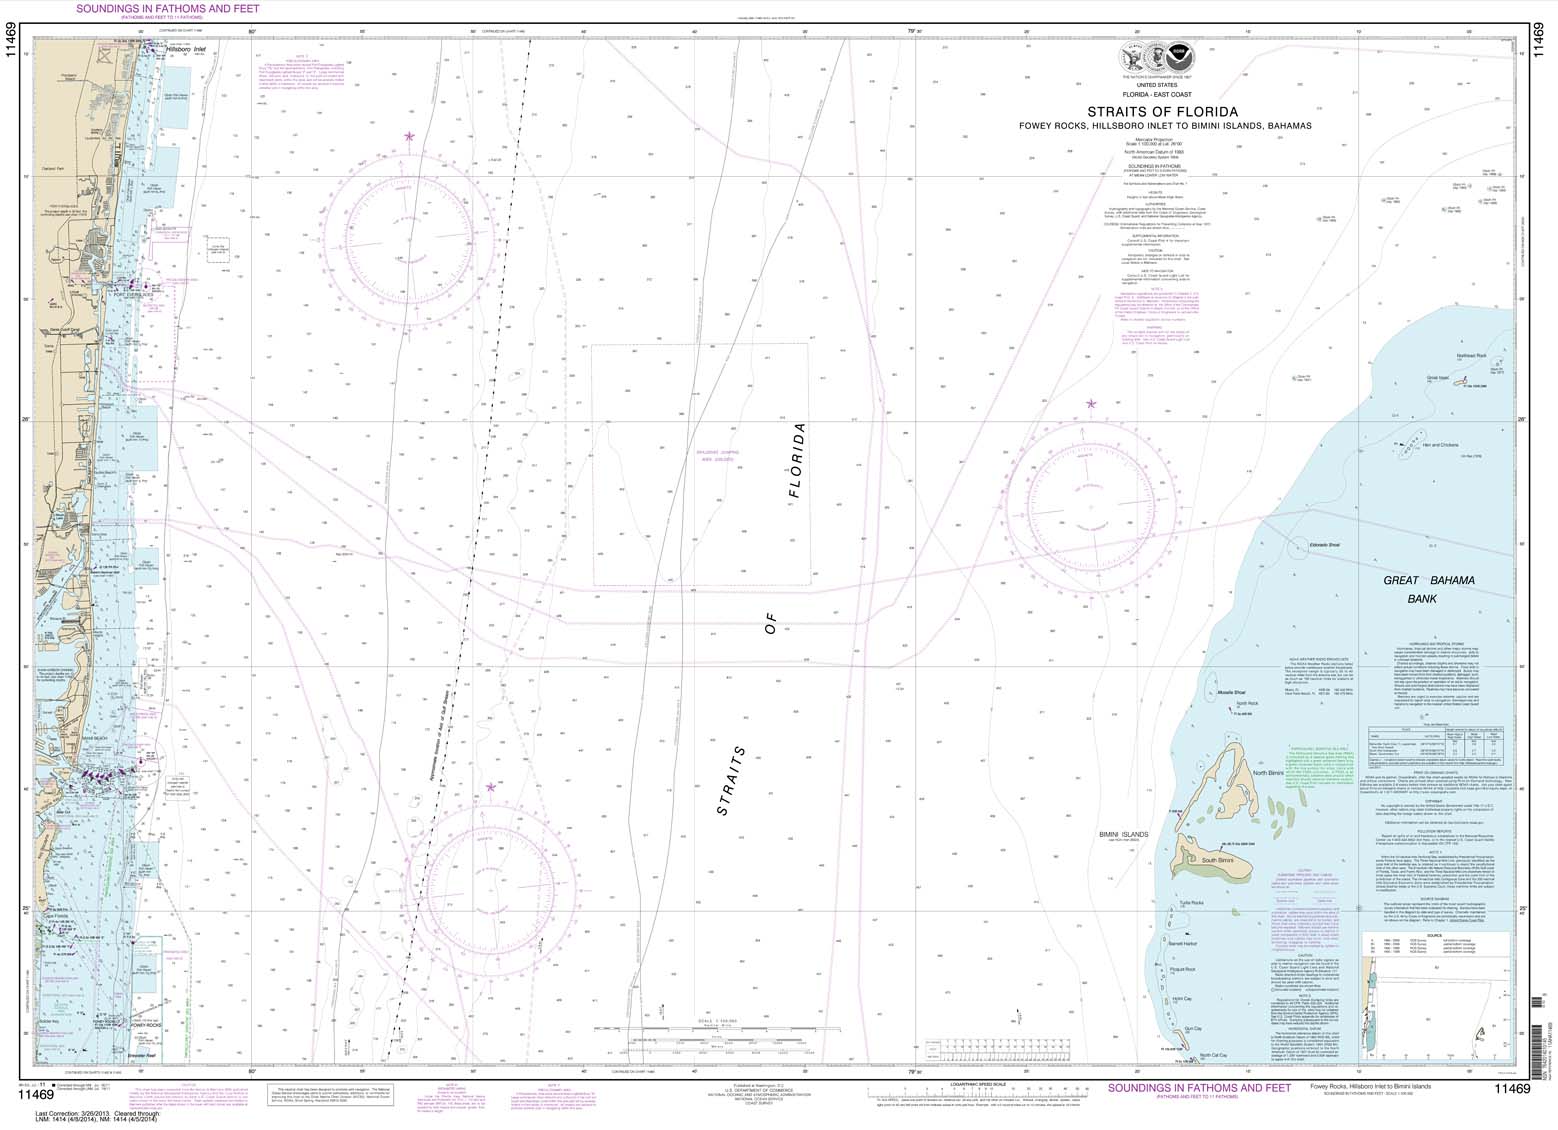 HISTORICAL NOAA Chart 11469: Straits of Florida Fowey Rocks: Hillsboro Inlet to Bimini Islands: Bahamas